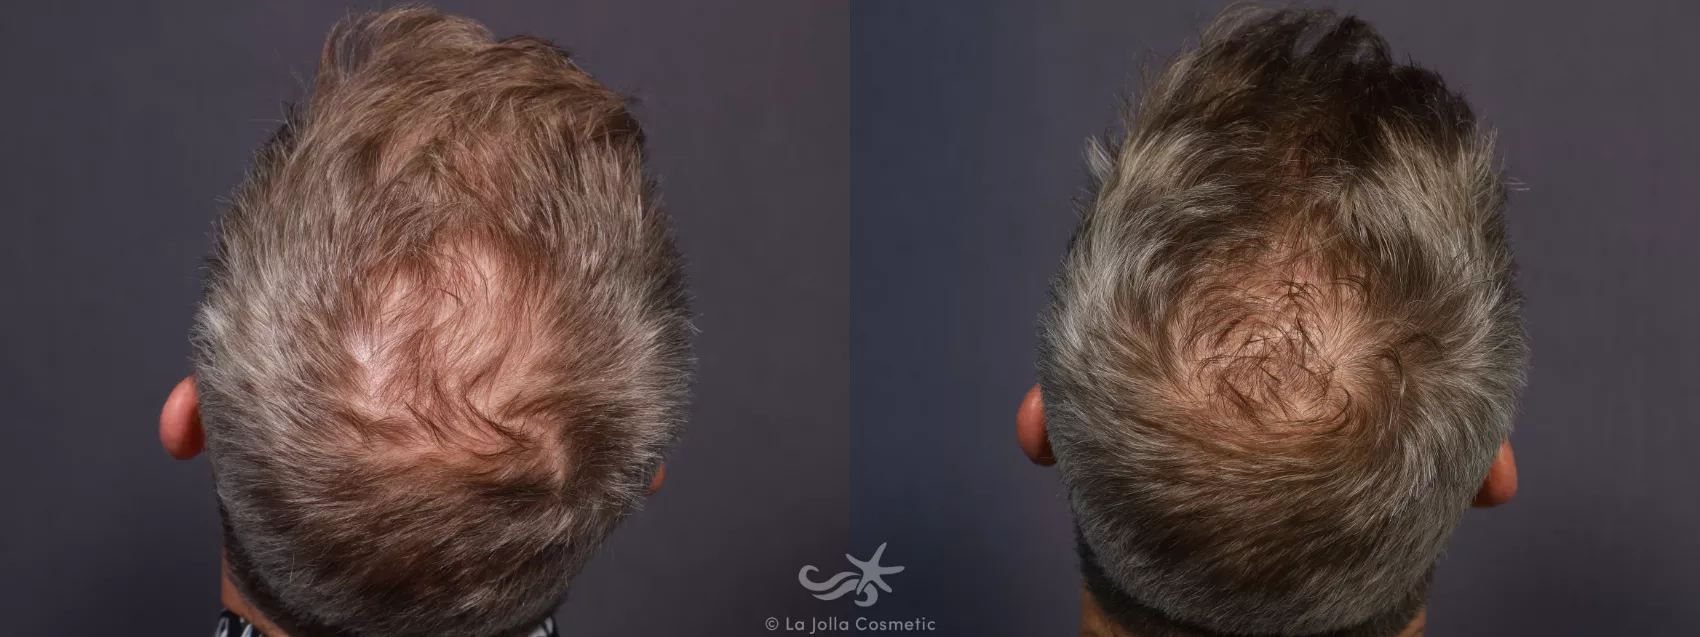 Before & After Hair Restoration Result 724 Birds Eye View in San Diego, CA